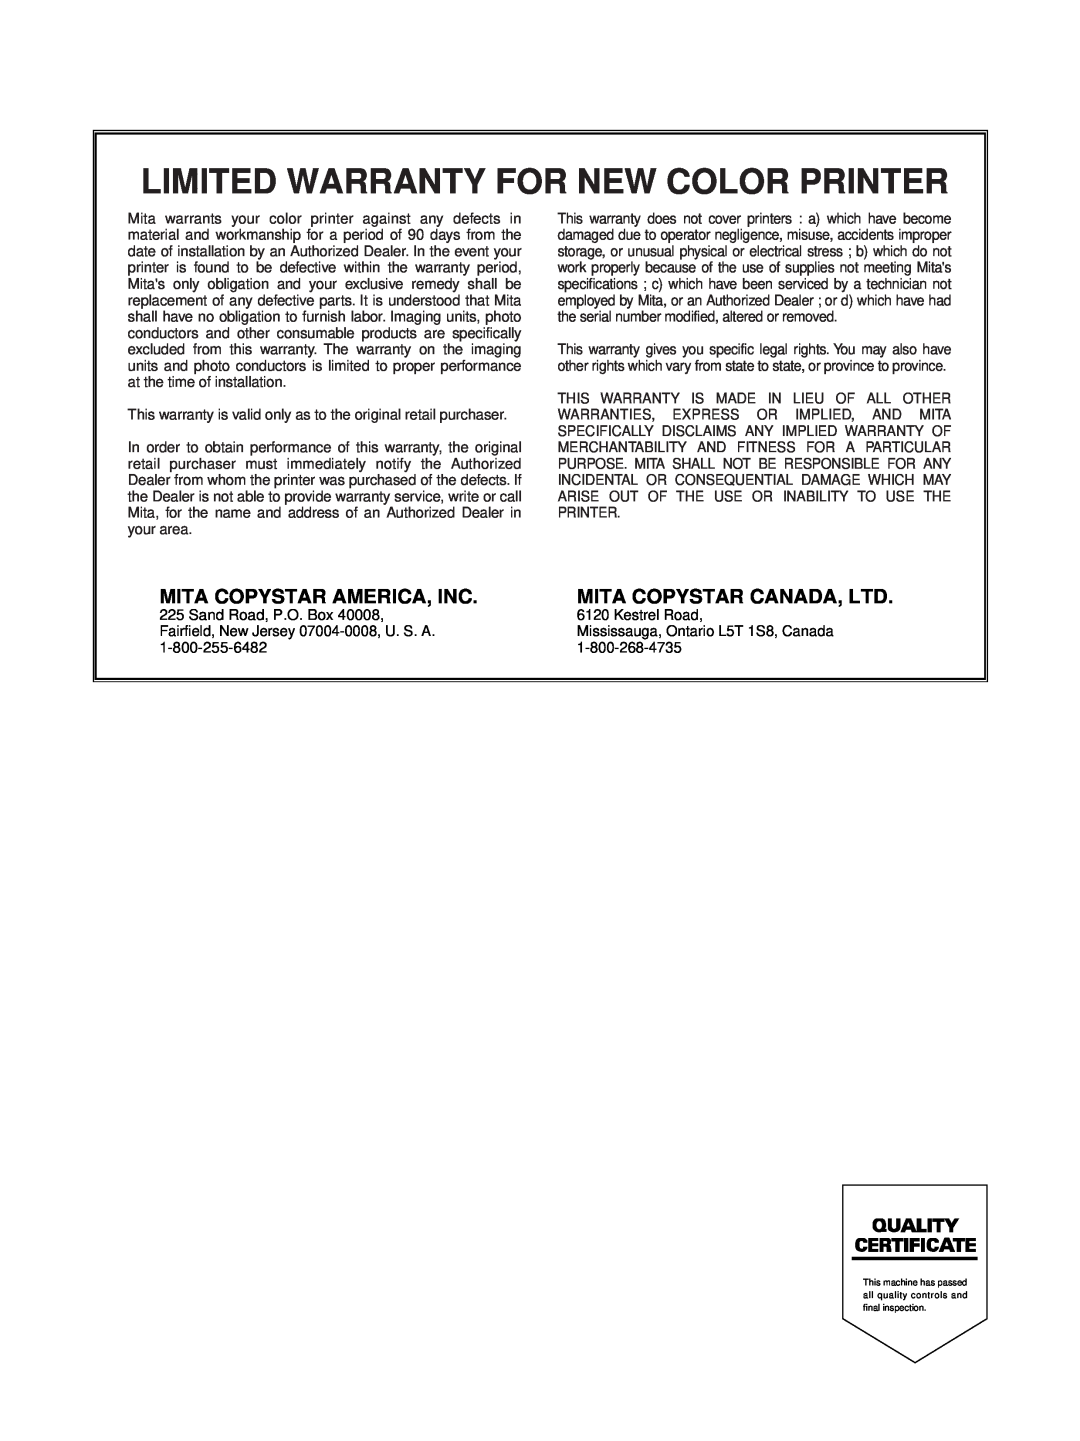 HP Ci 1100 manual Limited Warranty For New Color Printer, Mita Copystar America, Inc 